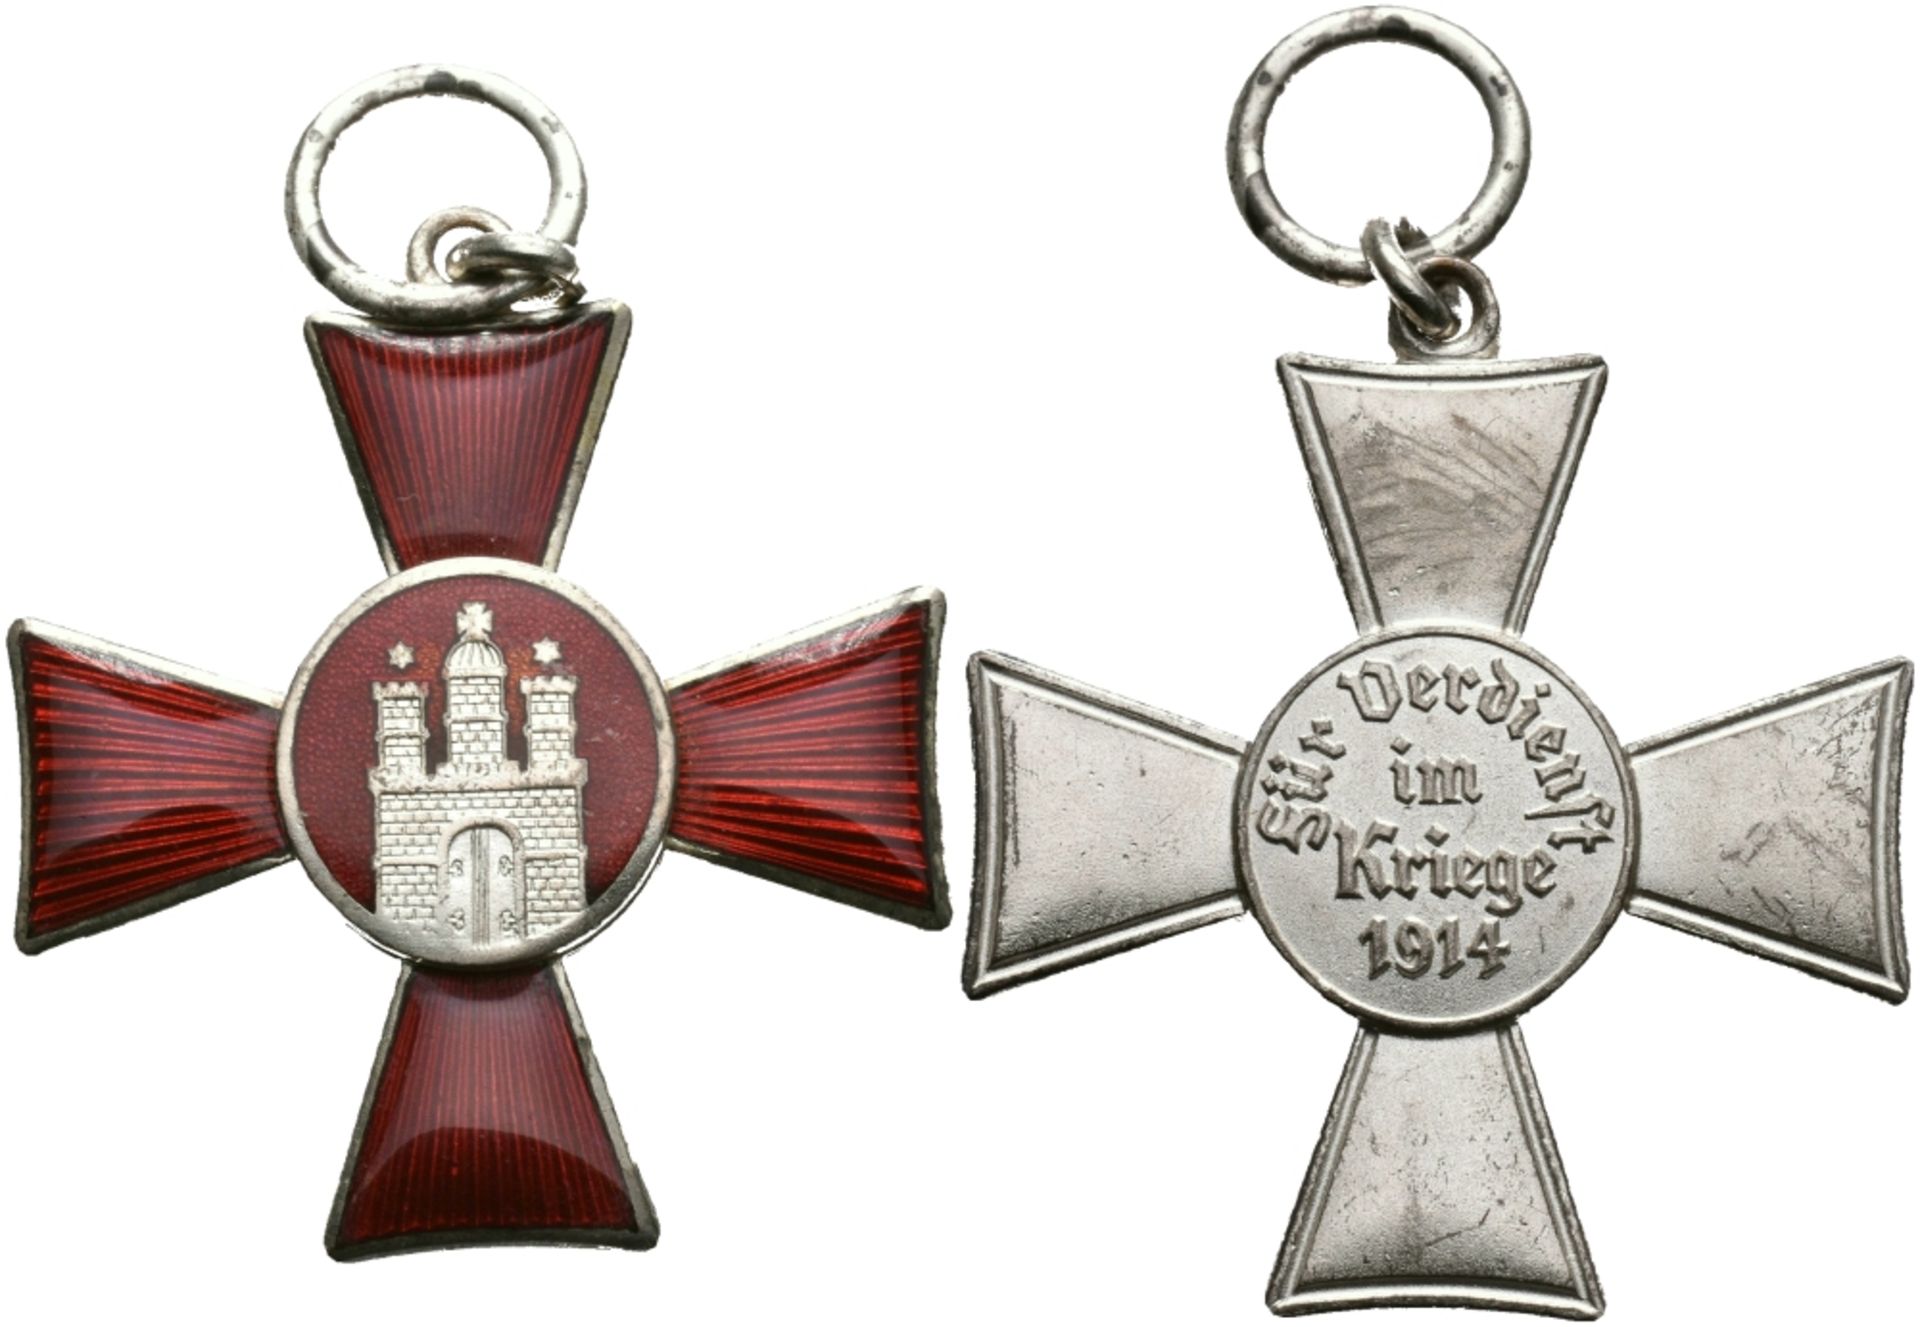 Hamburg, Hanseatic Cross (1915-1918), enameled, OEK 688, condition 2.